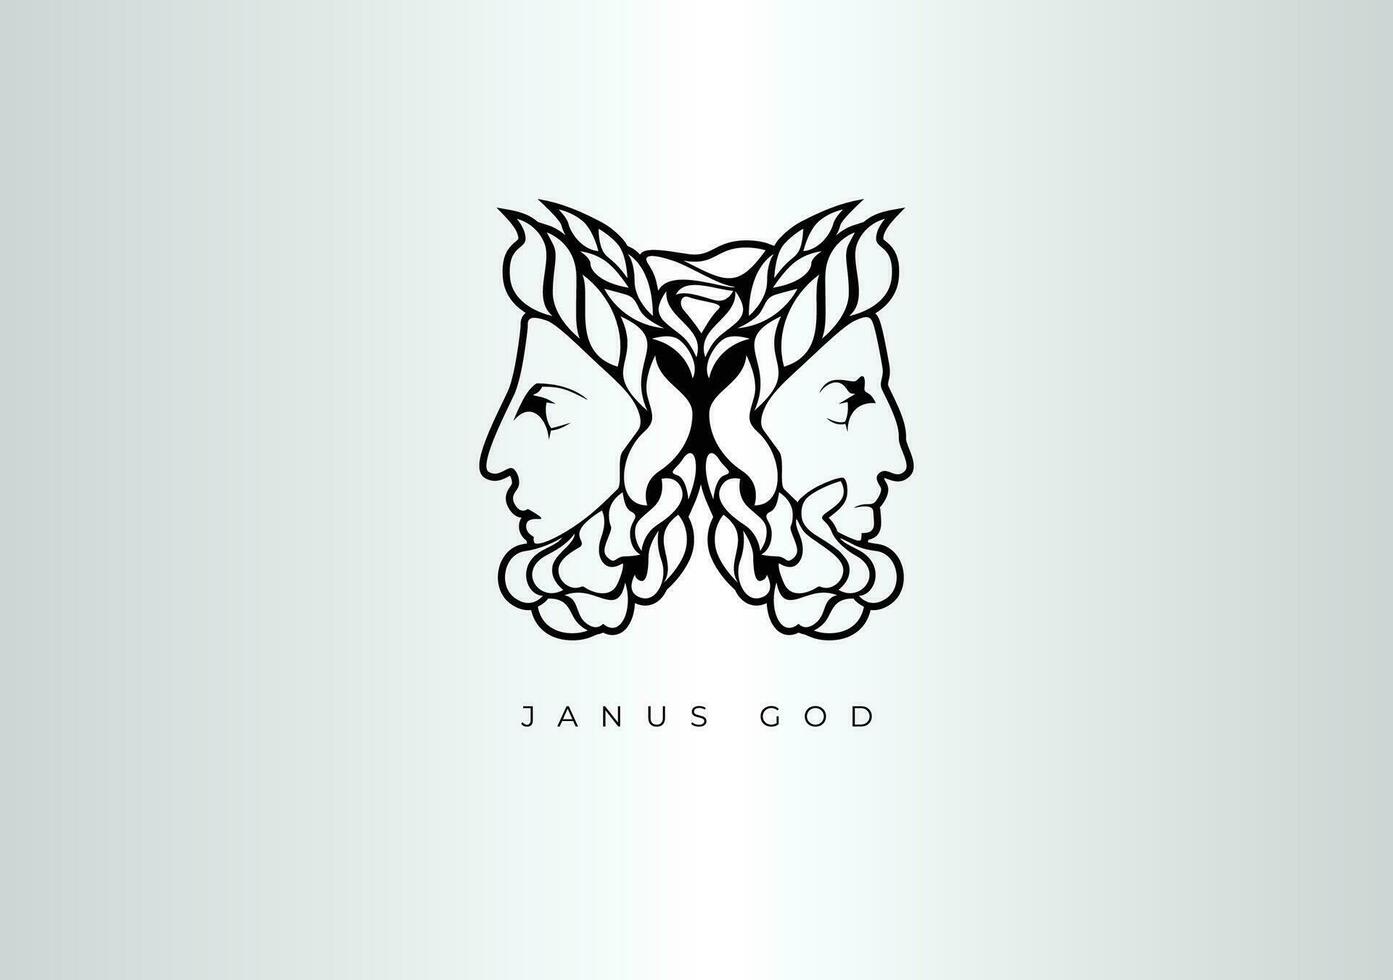 Janus god logo vector